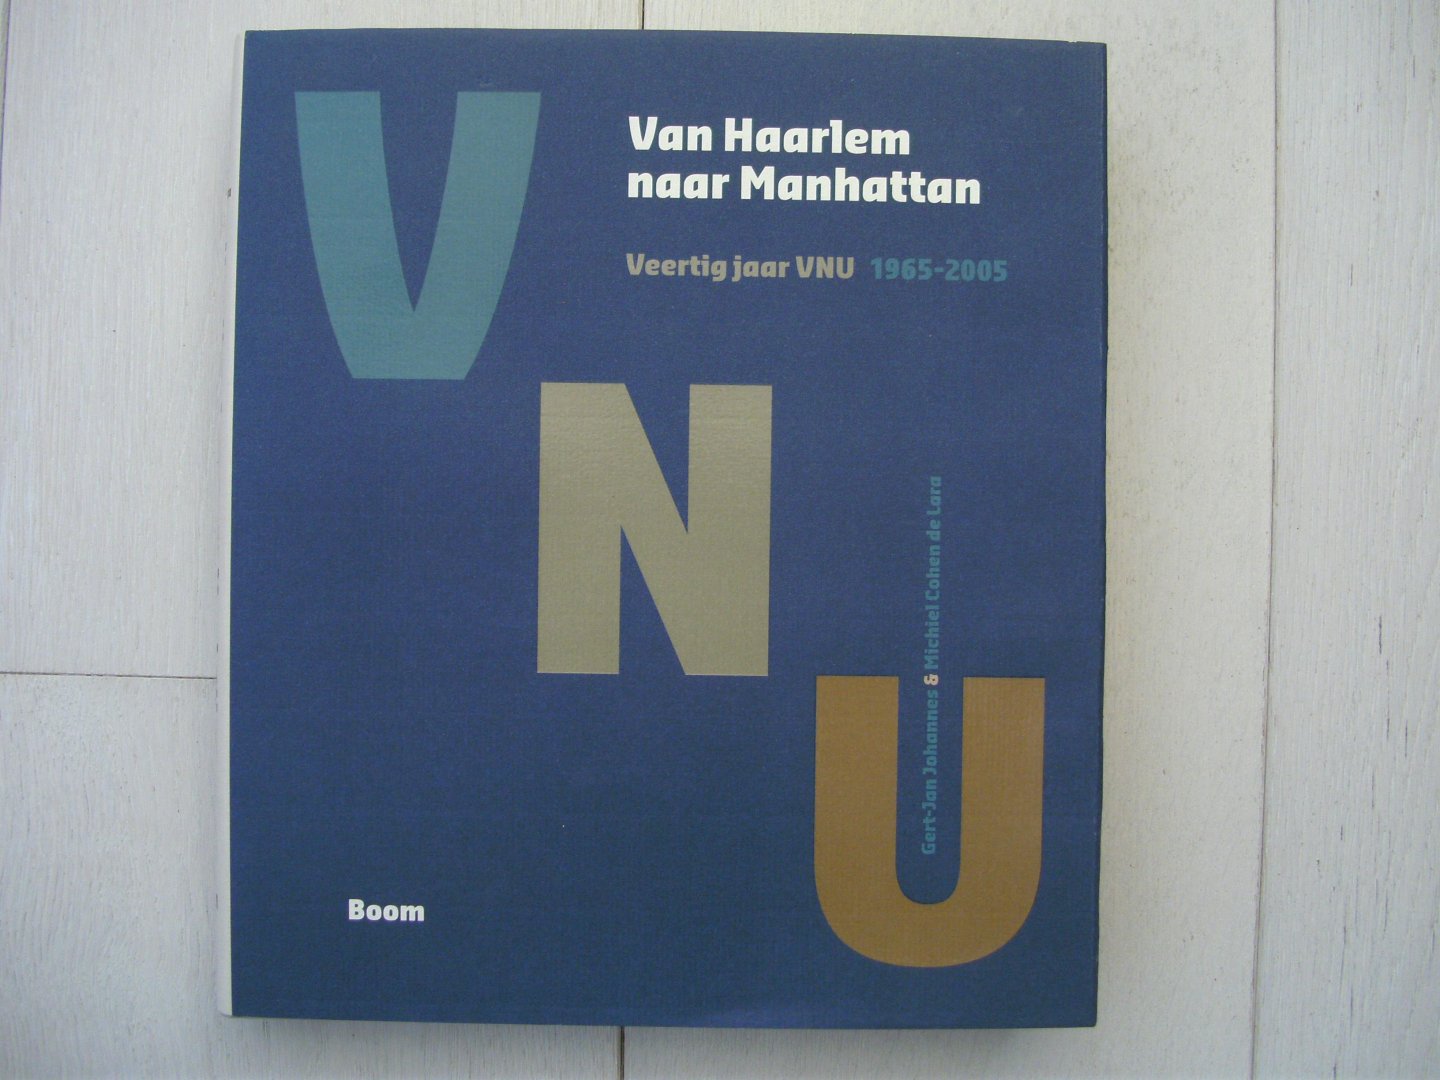 Lara, M. de - Van Haarlem tot Manhattan / veertig jaar VNU 1965-2005